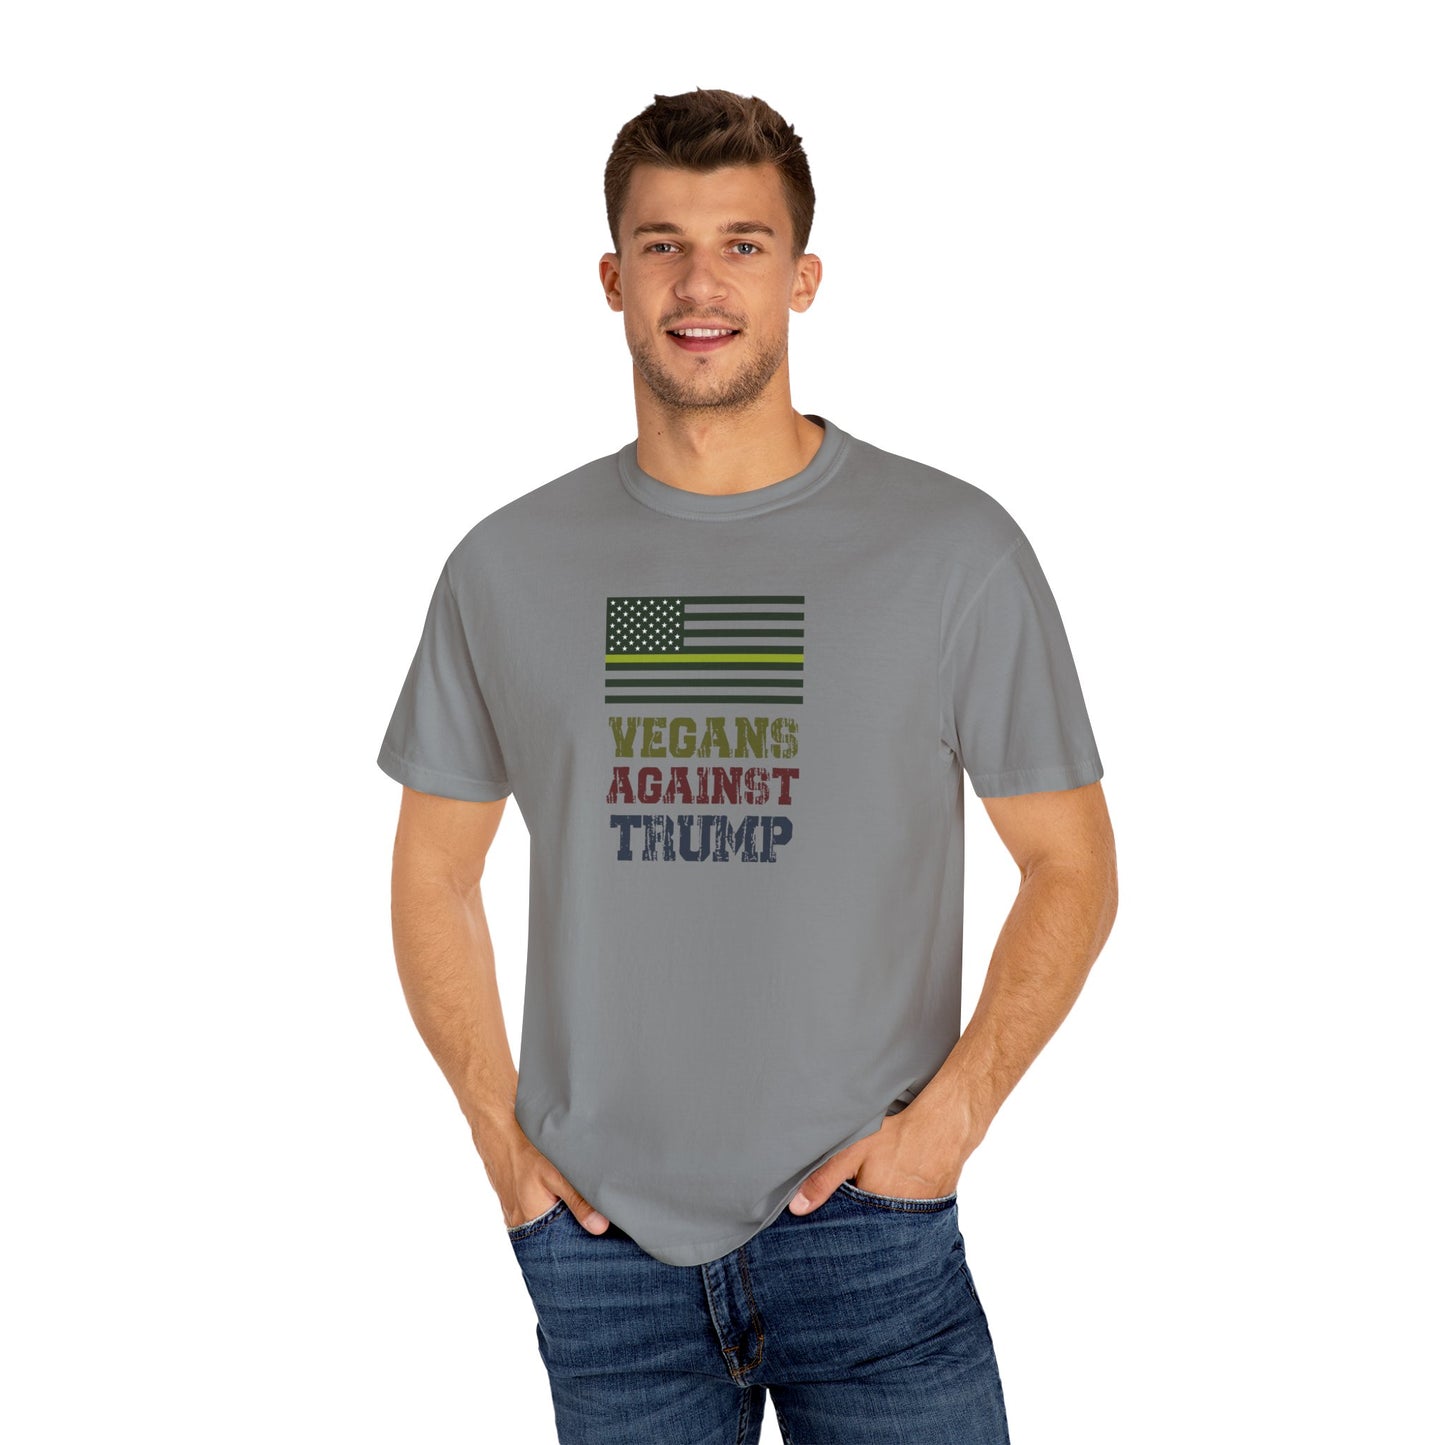 Vegans Against Trump Tee Shirt {Unisex}